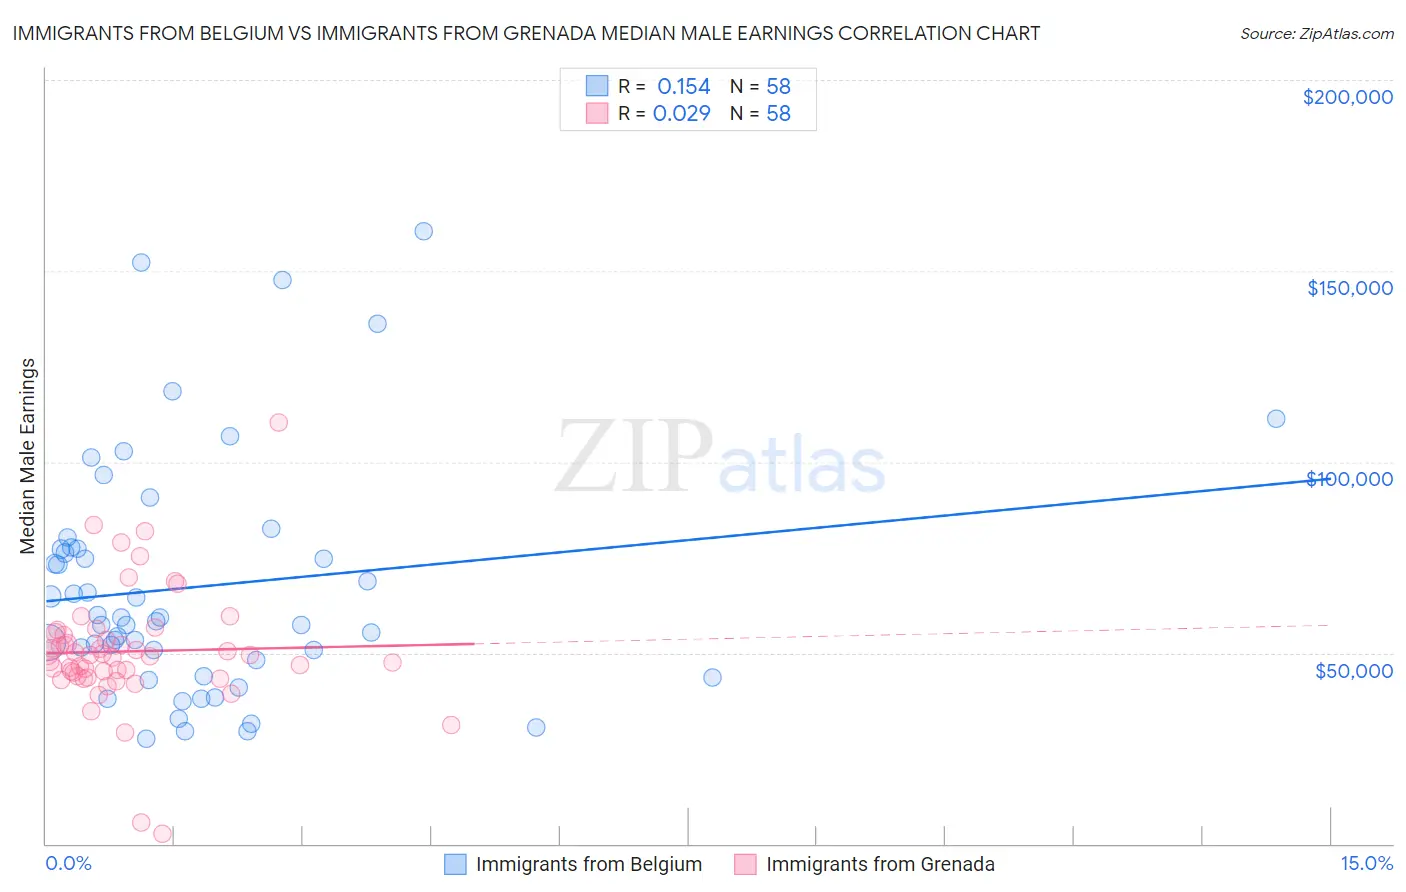 Immigrants from Belgium vs Immigrants from Grenada Median Male Earnings